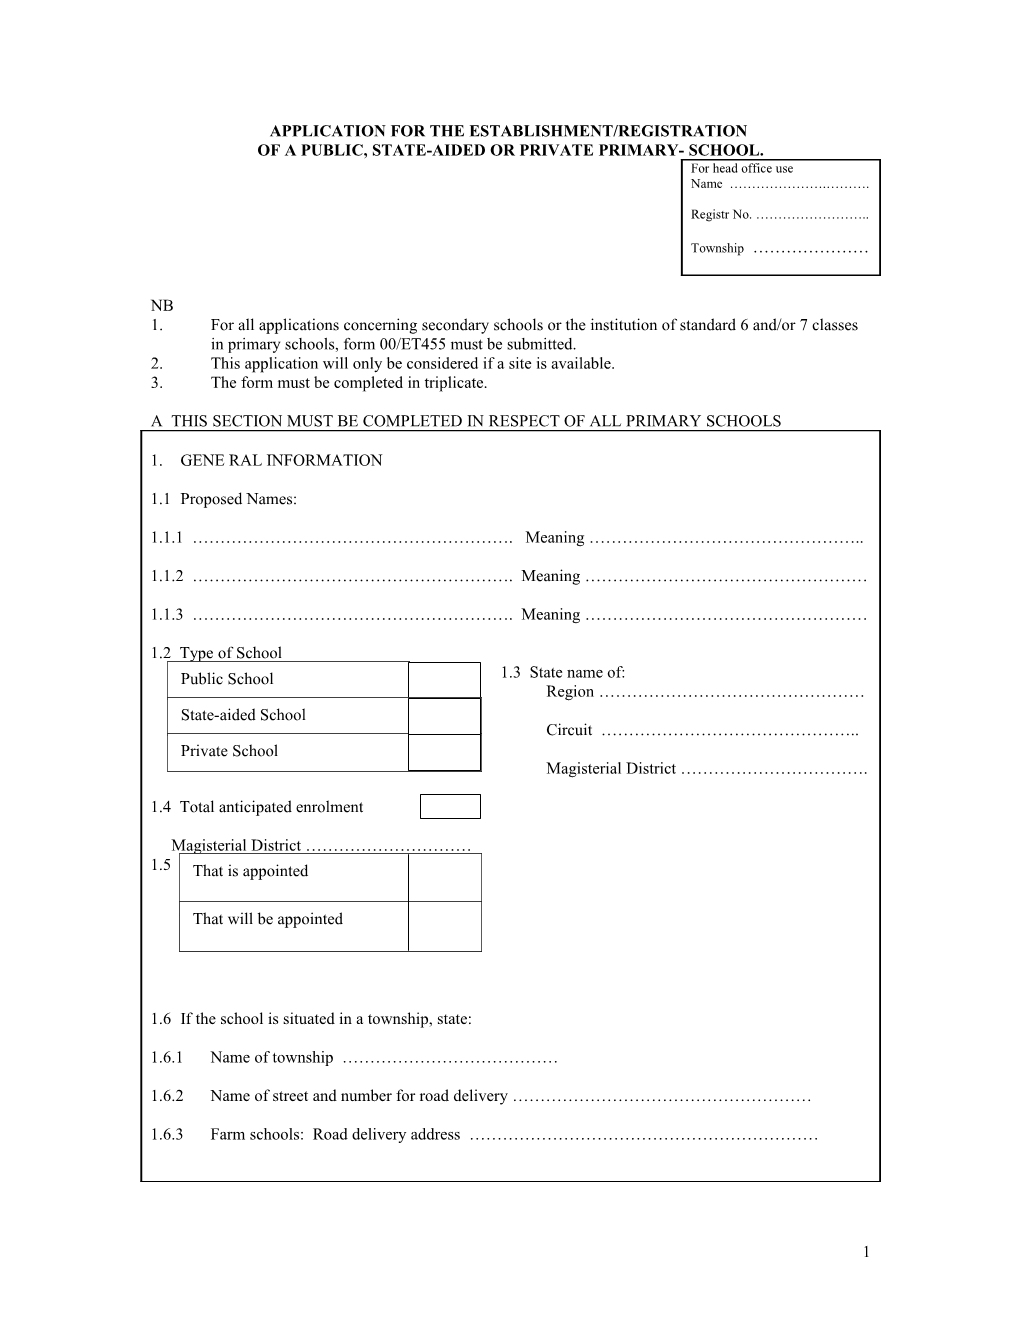 Application for the Establishment/Registration